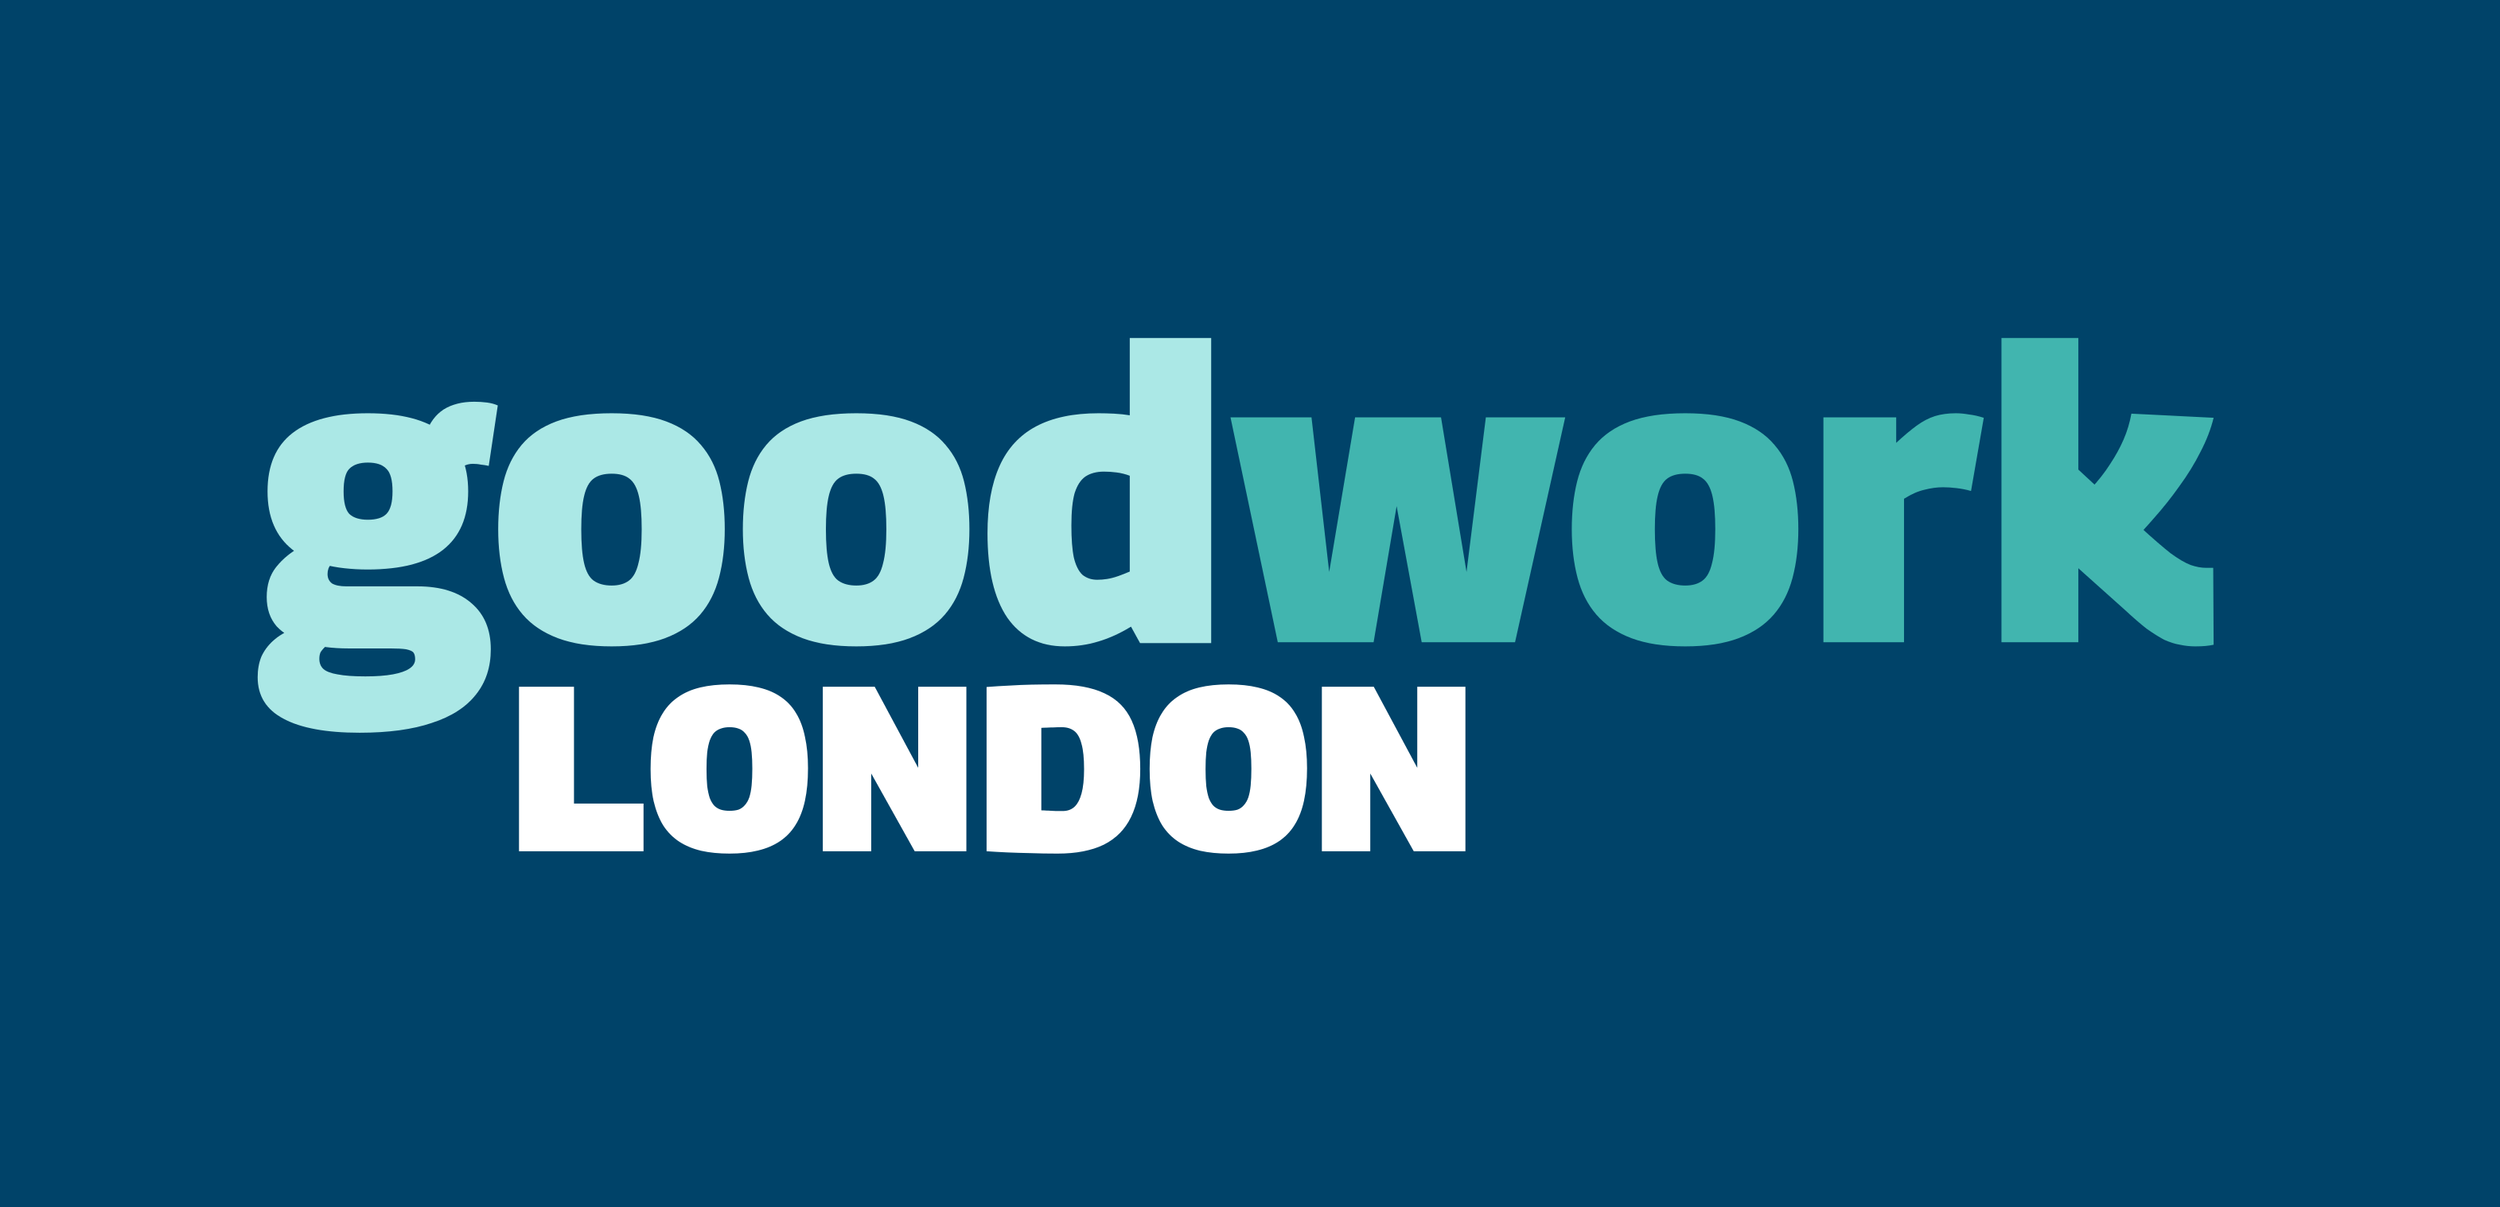 goodwork logo.png